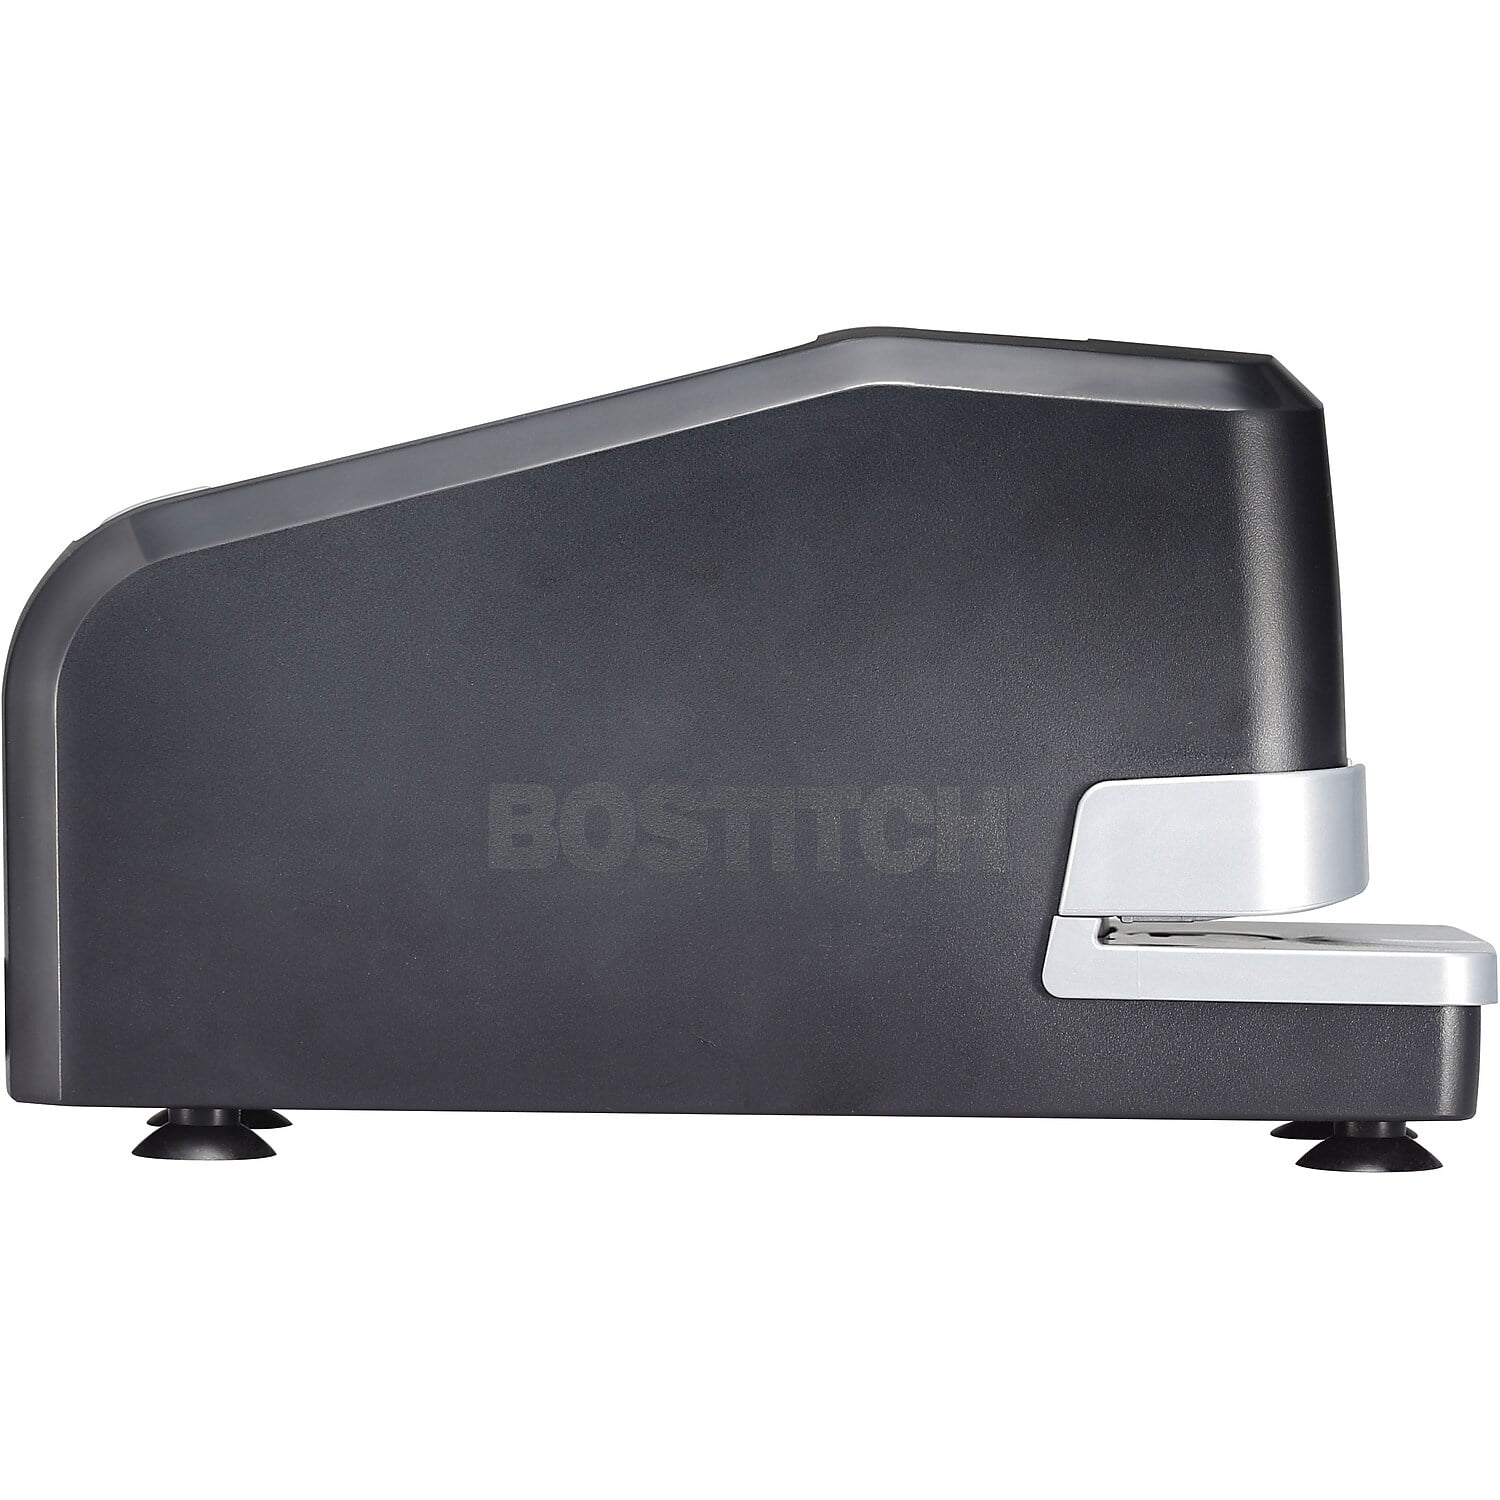 Bostitch Impulse 30 Sheet Electric Stapler, Black 